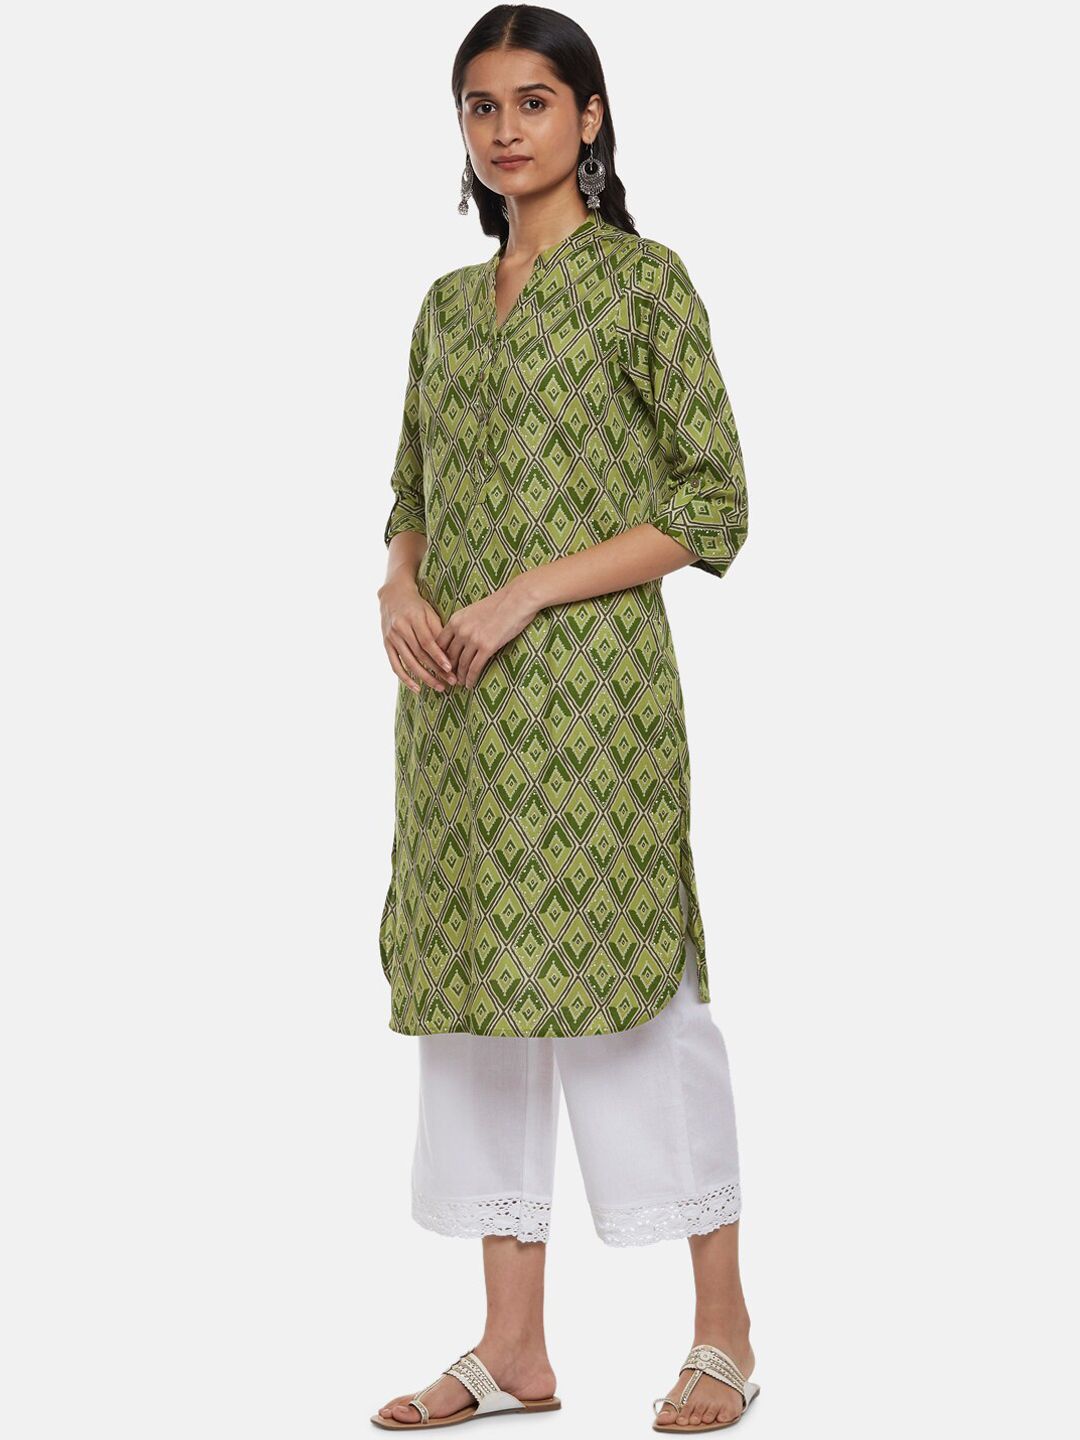 RANGMANCH BY PANTALOONS Women Olive Green Ethnic Motifs Checked Thread Work Pathani Kurta Price in India